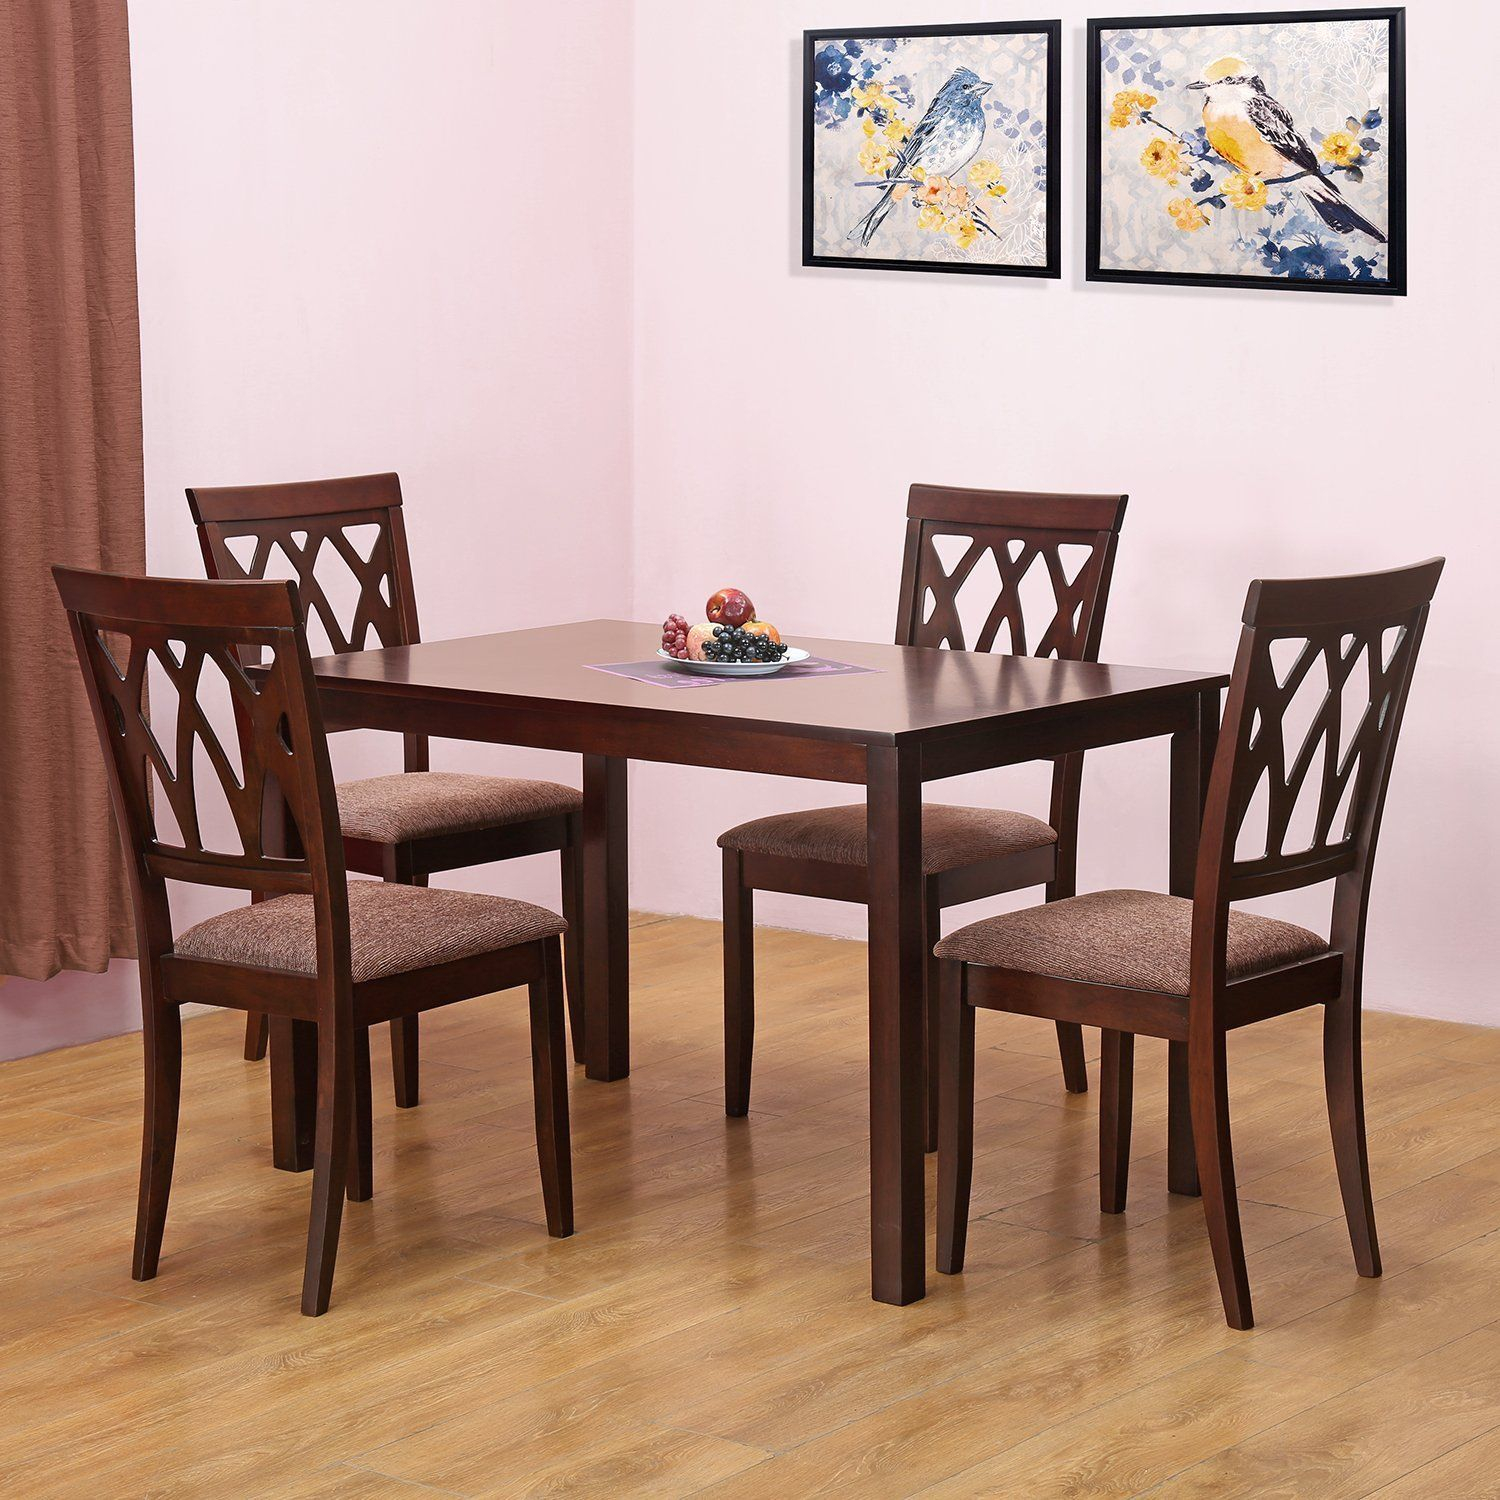 Home Nilkamal Peak Four Seater Dining Table Set Beige regarding dimensions 1500 X 1500